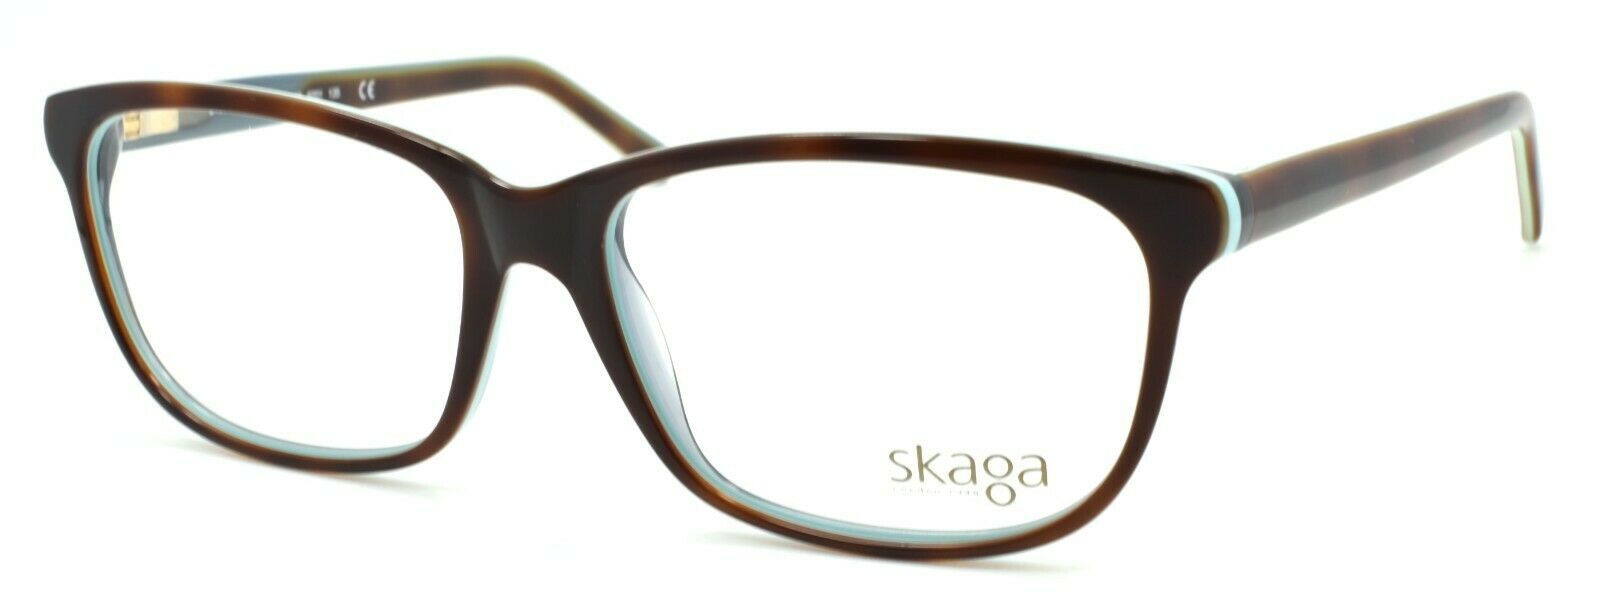 1-Skaga 2468 Eleonora 9201 Women's Eyeglasses Frames 55-15-135 Brown / Blue-IKSpecs